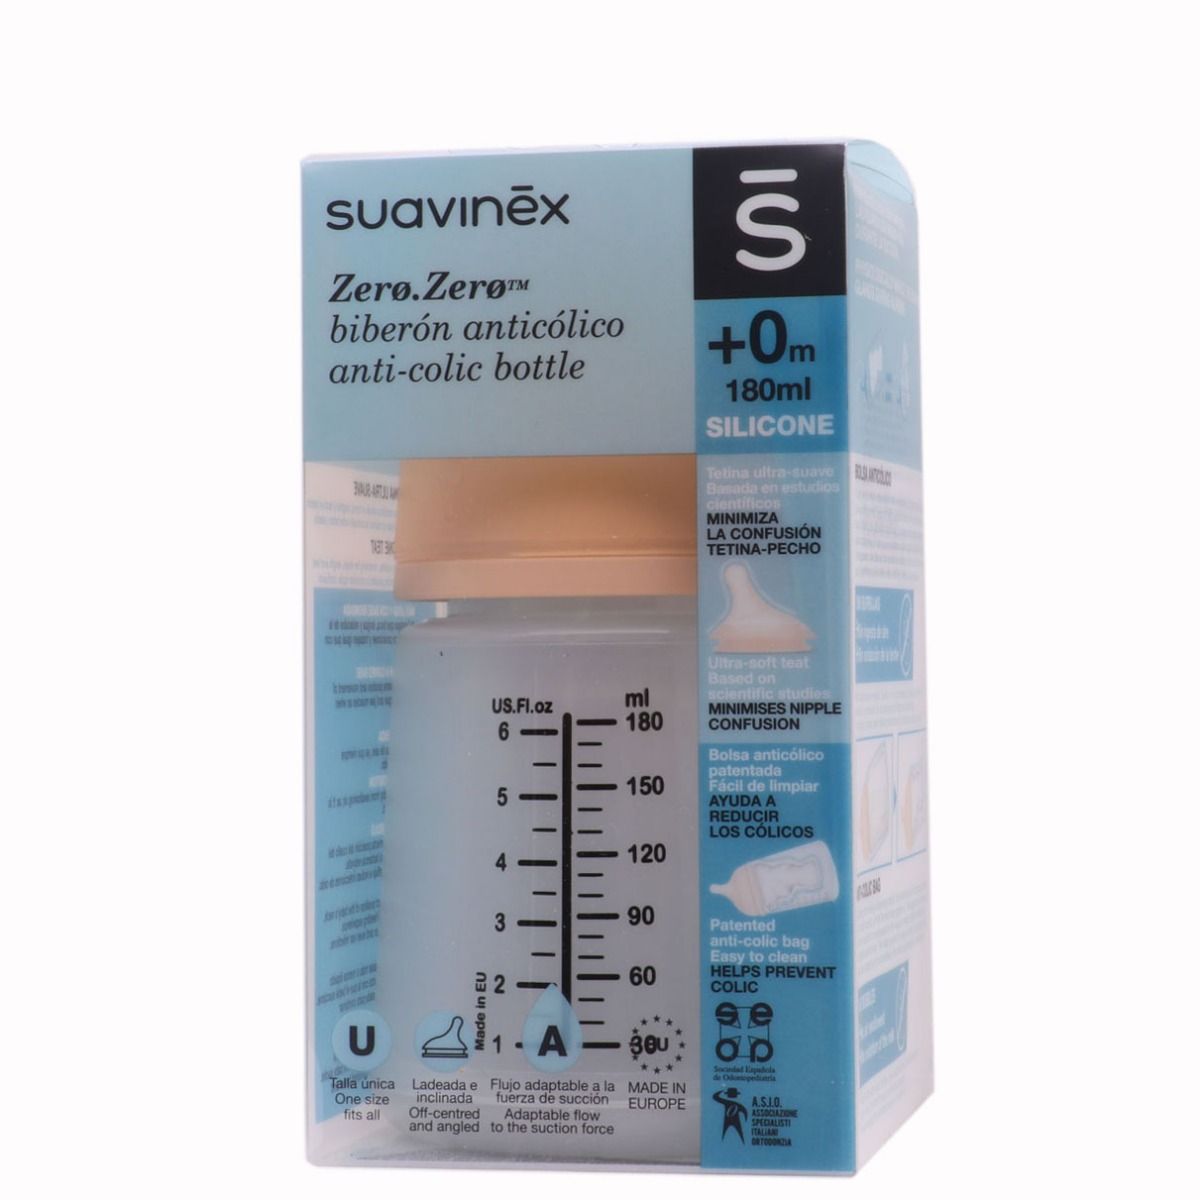 Suavinex biberon anticolico zero.zero tetina silicona lactancia